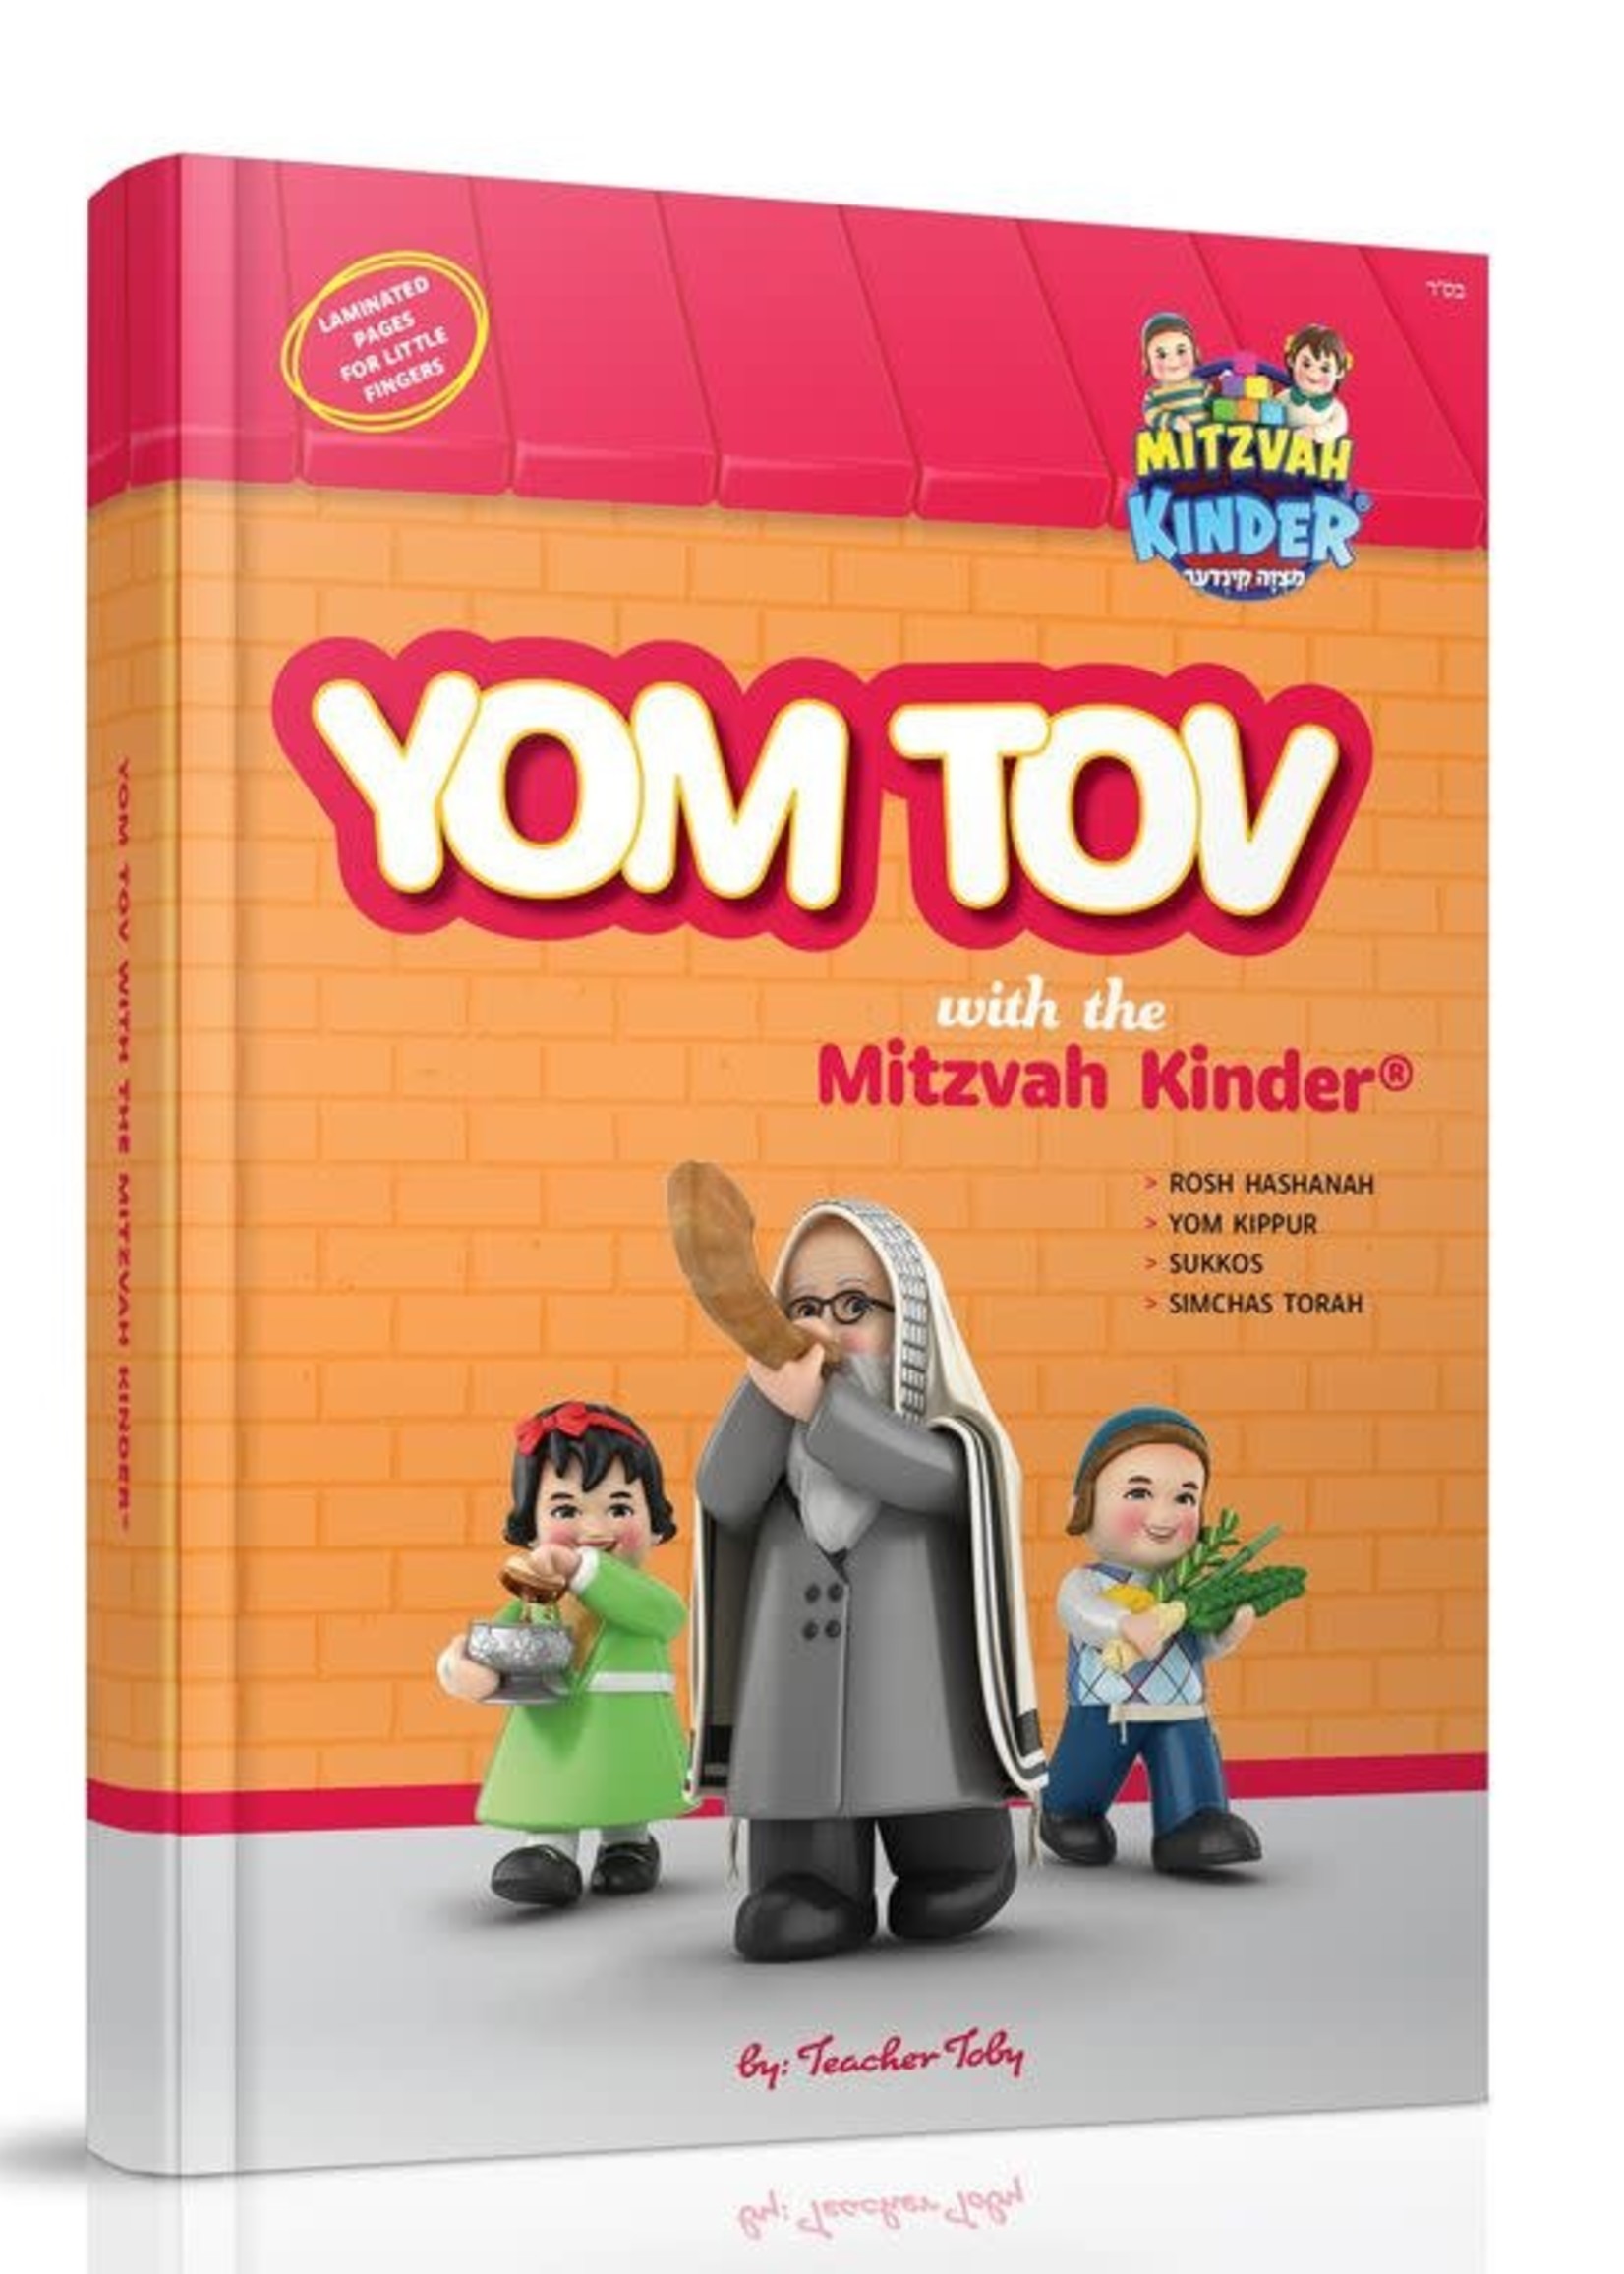 Mitzvah Kinder Yomtov Book English